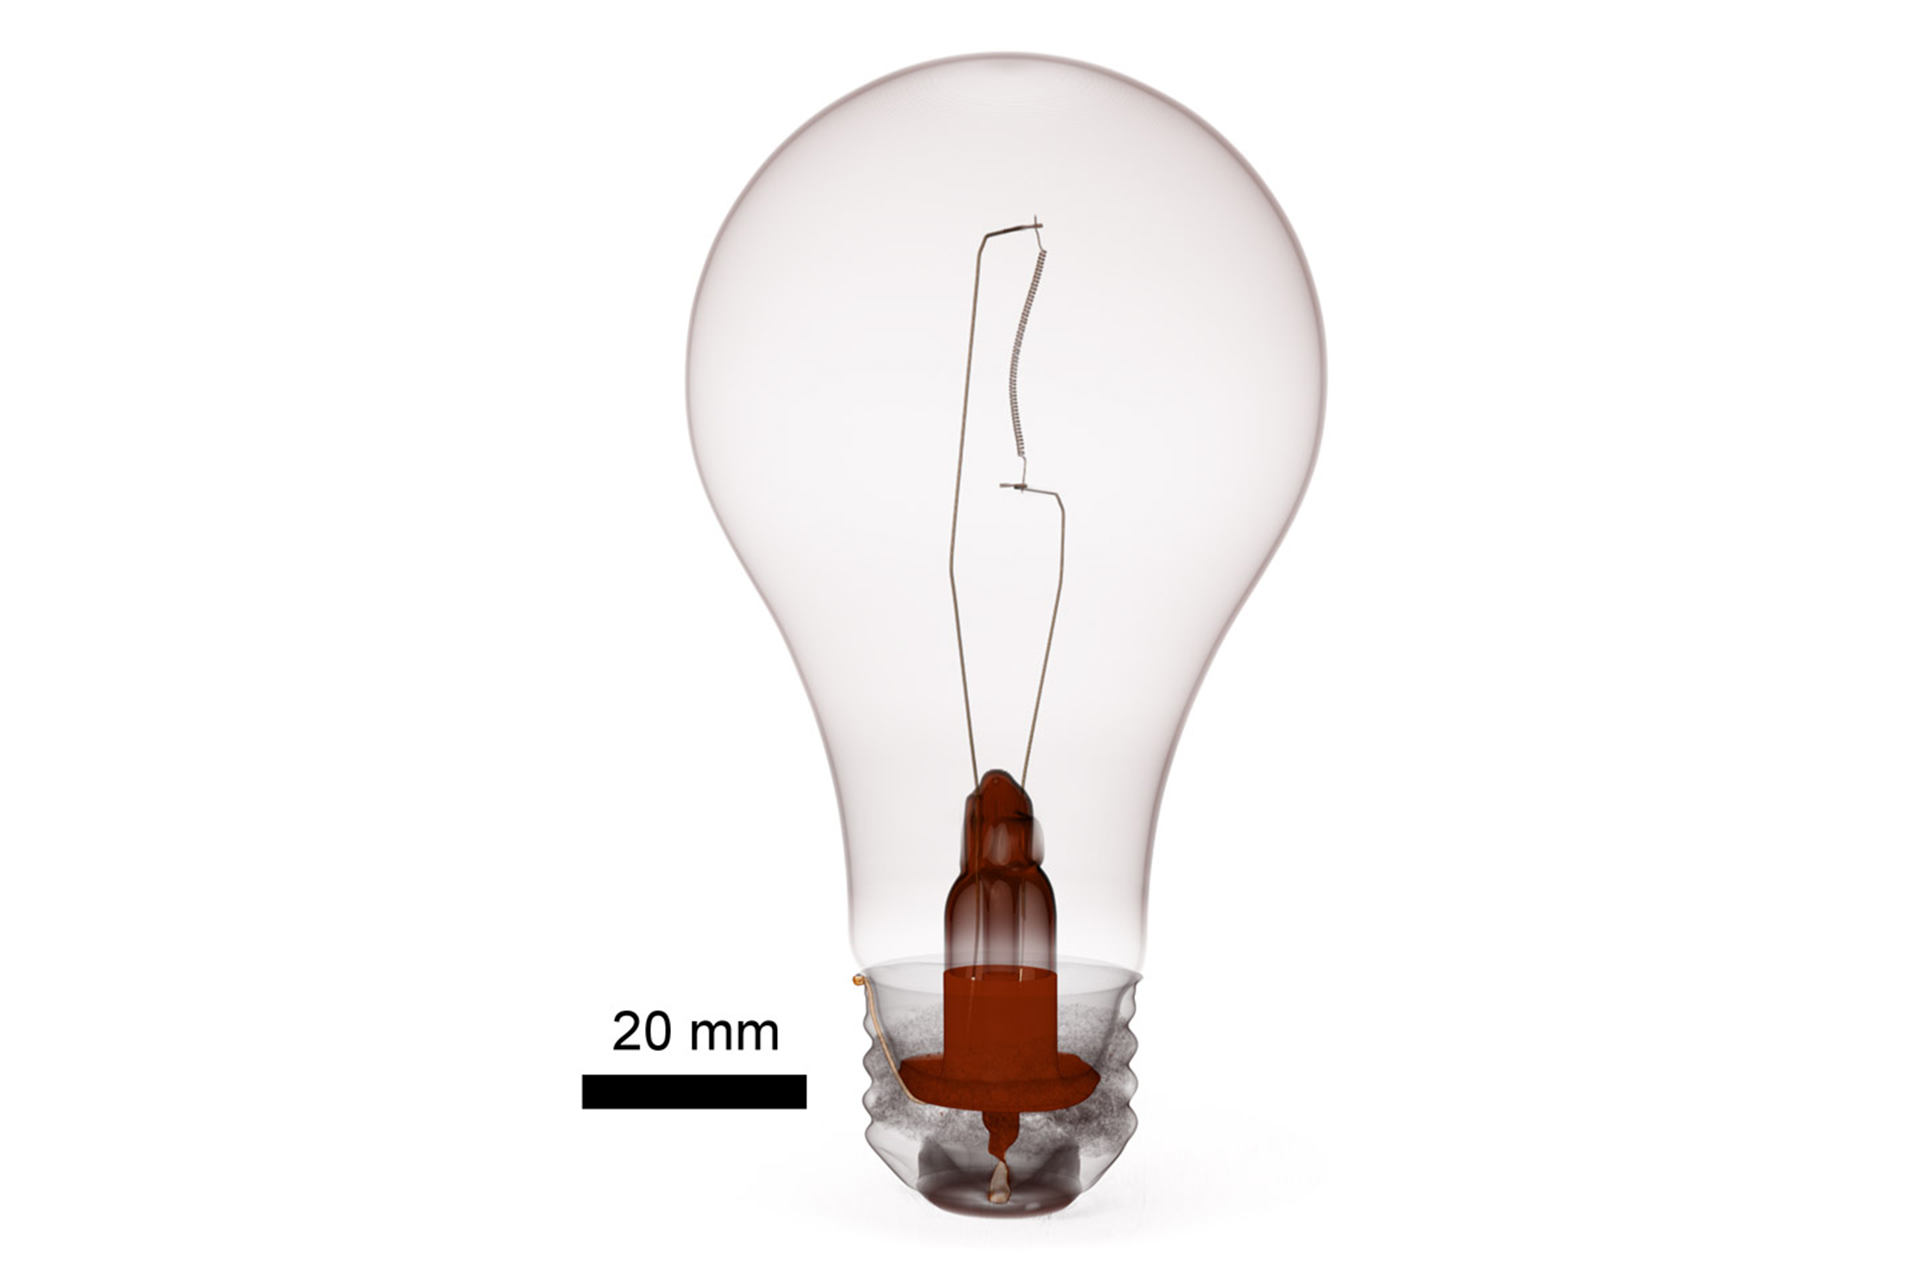 3D rendering of a light bulb